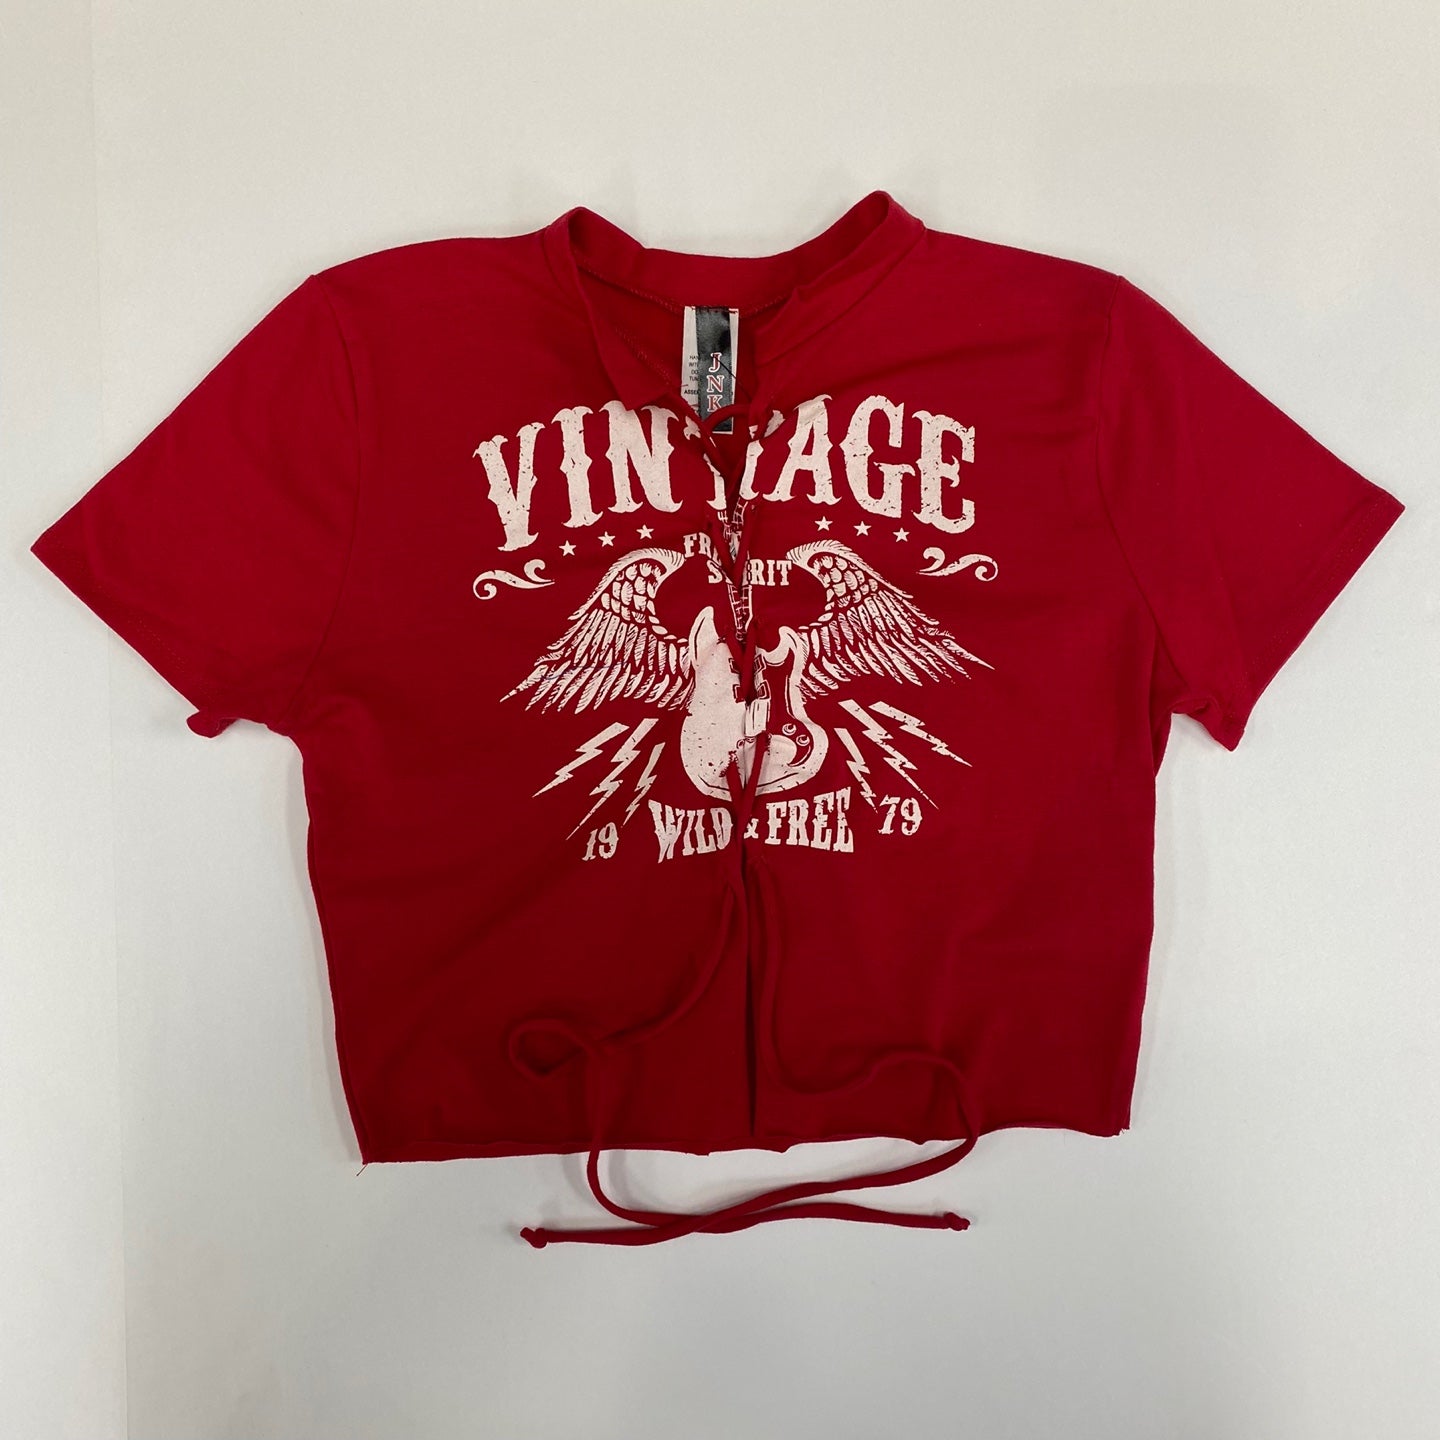 Women's Vintage Graphic Crop Top T-Shirt